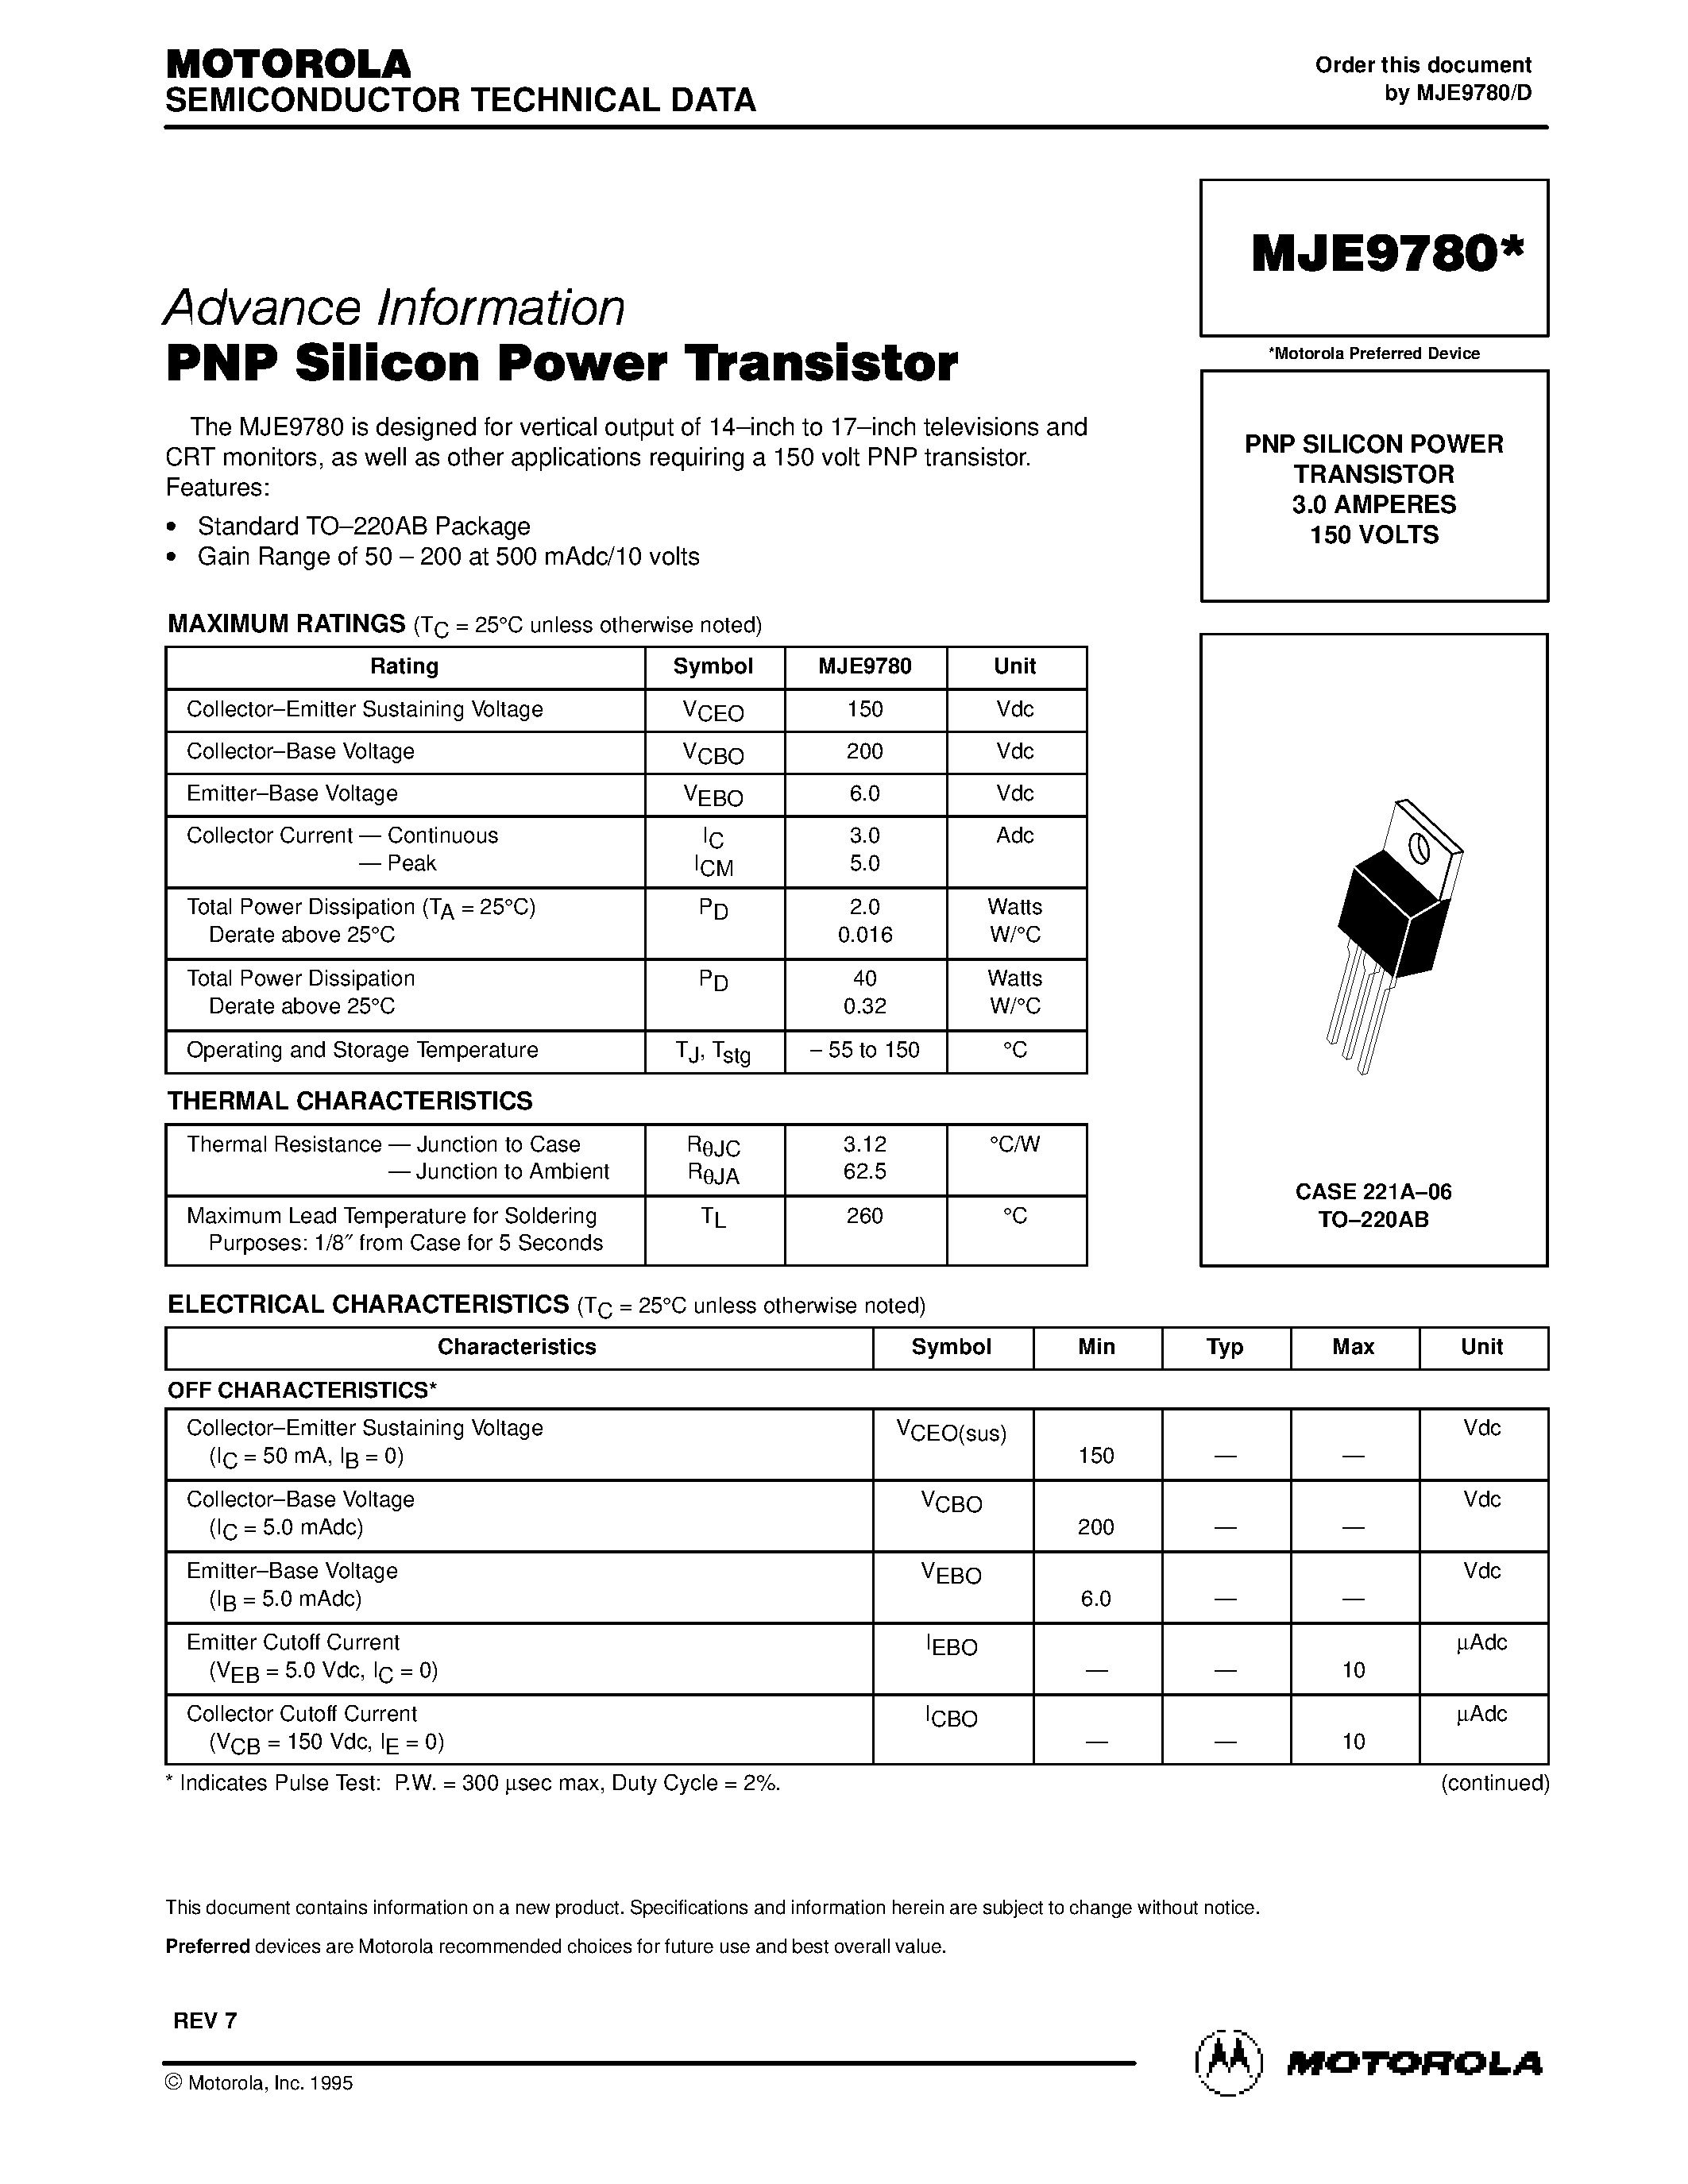 Datasheet MJE9780 - PNP SILICON POWER TRANSISTOR page 1